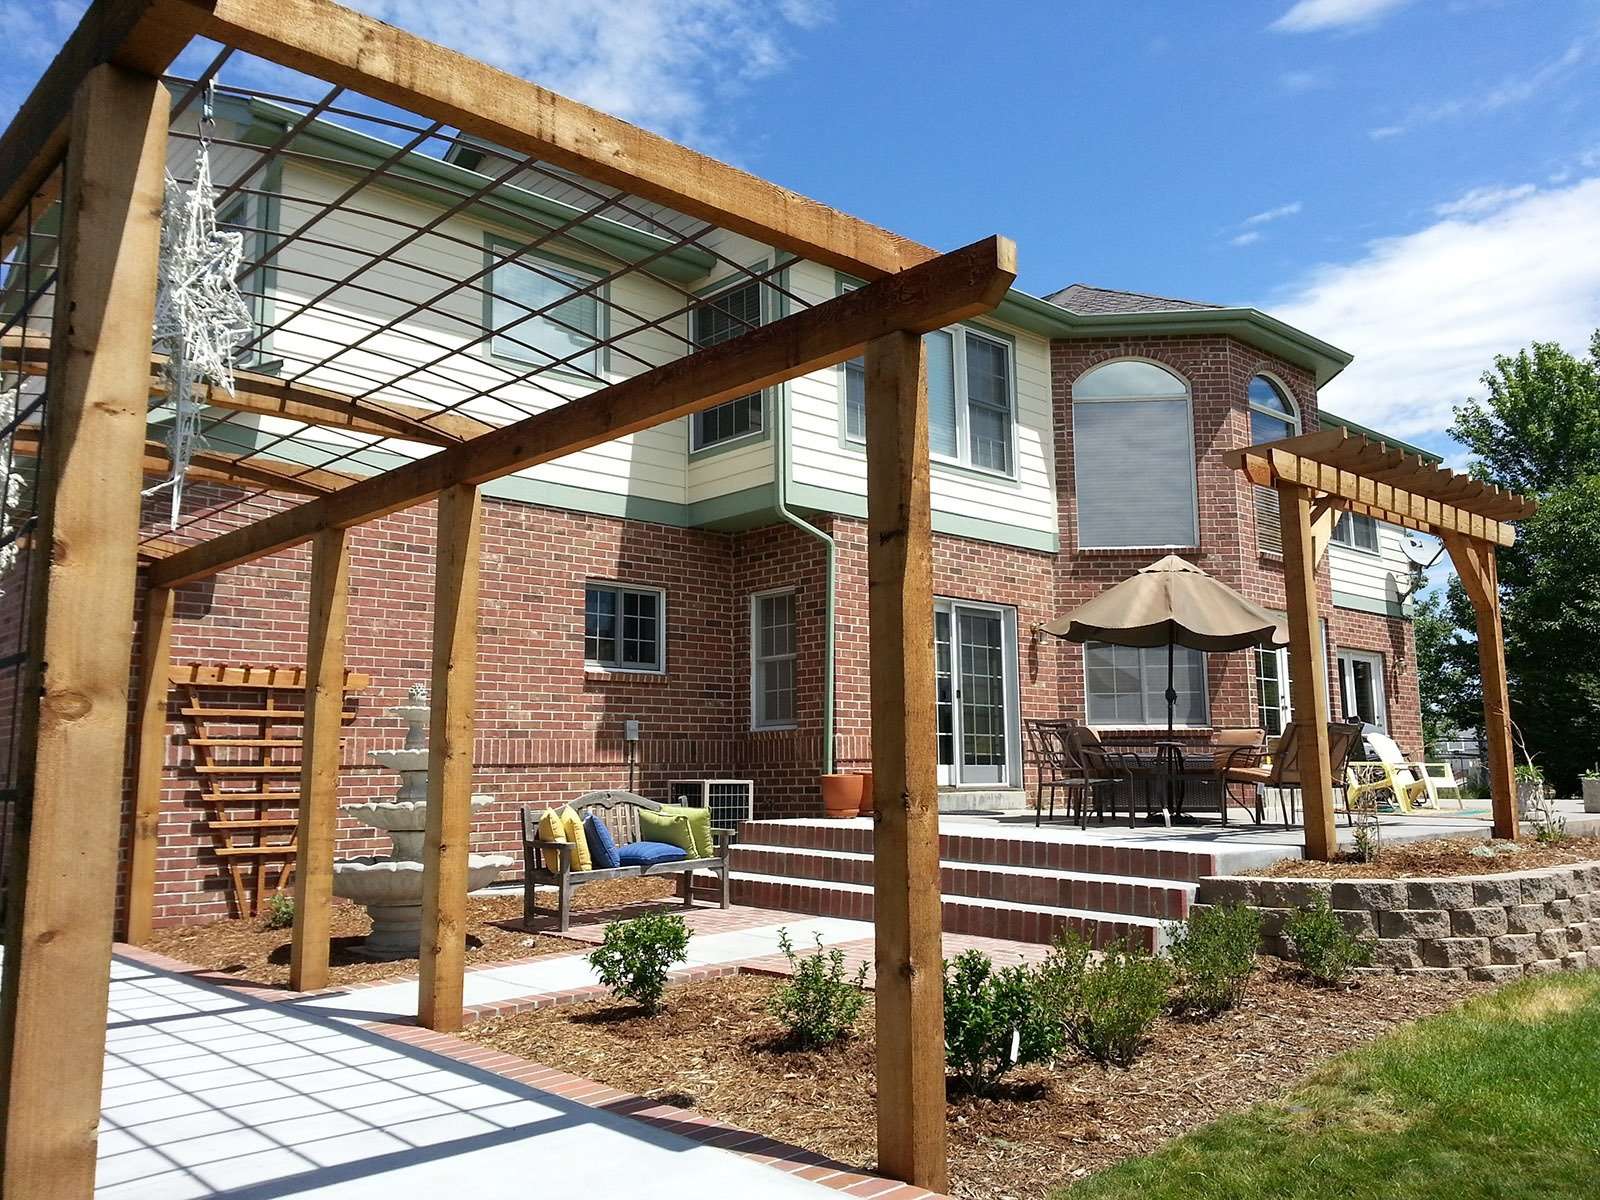 Benefits of Outdoor Living Spaces